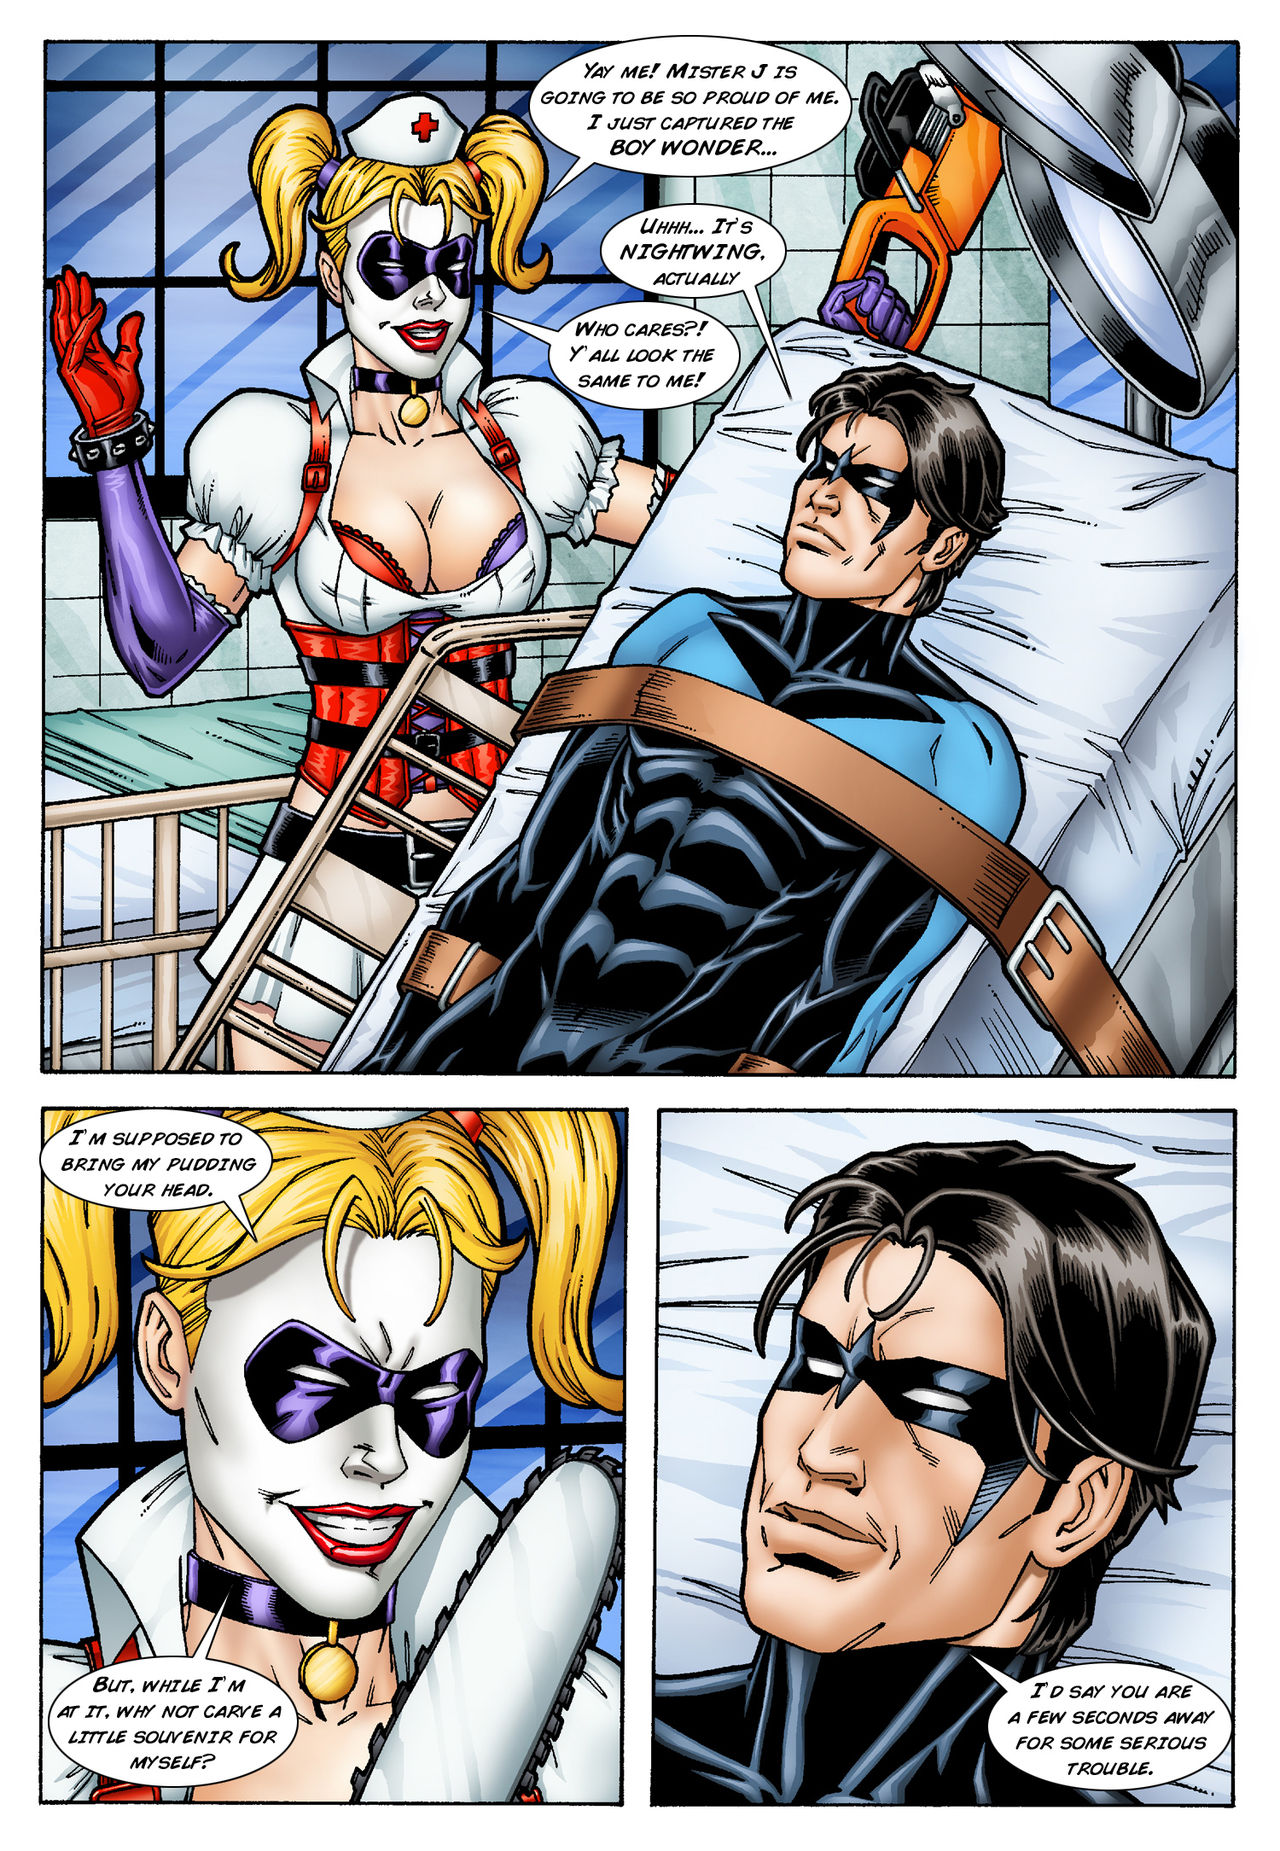 Sexy harley quinn nightwing batman comic porno